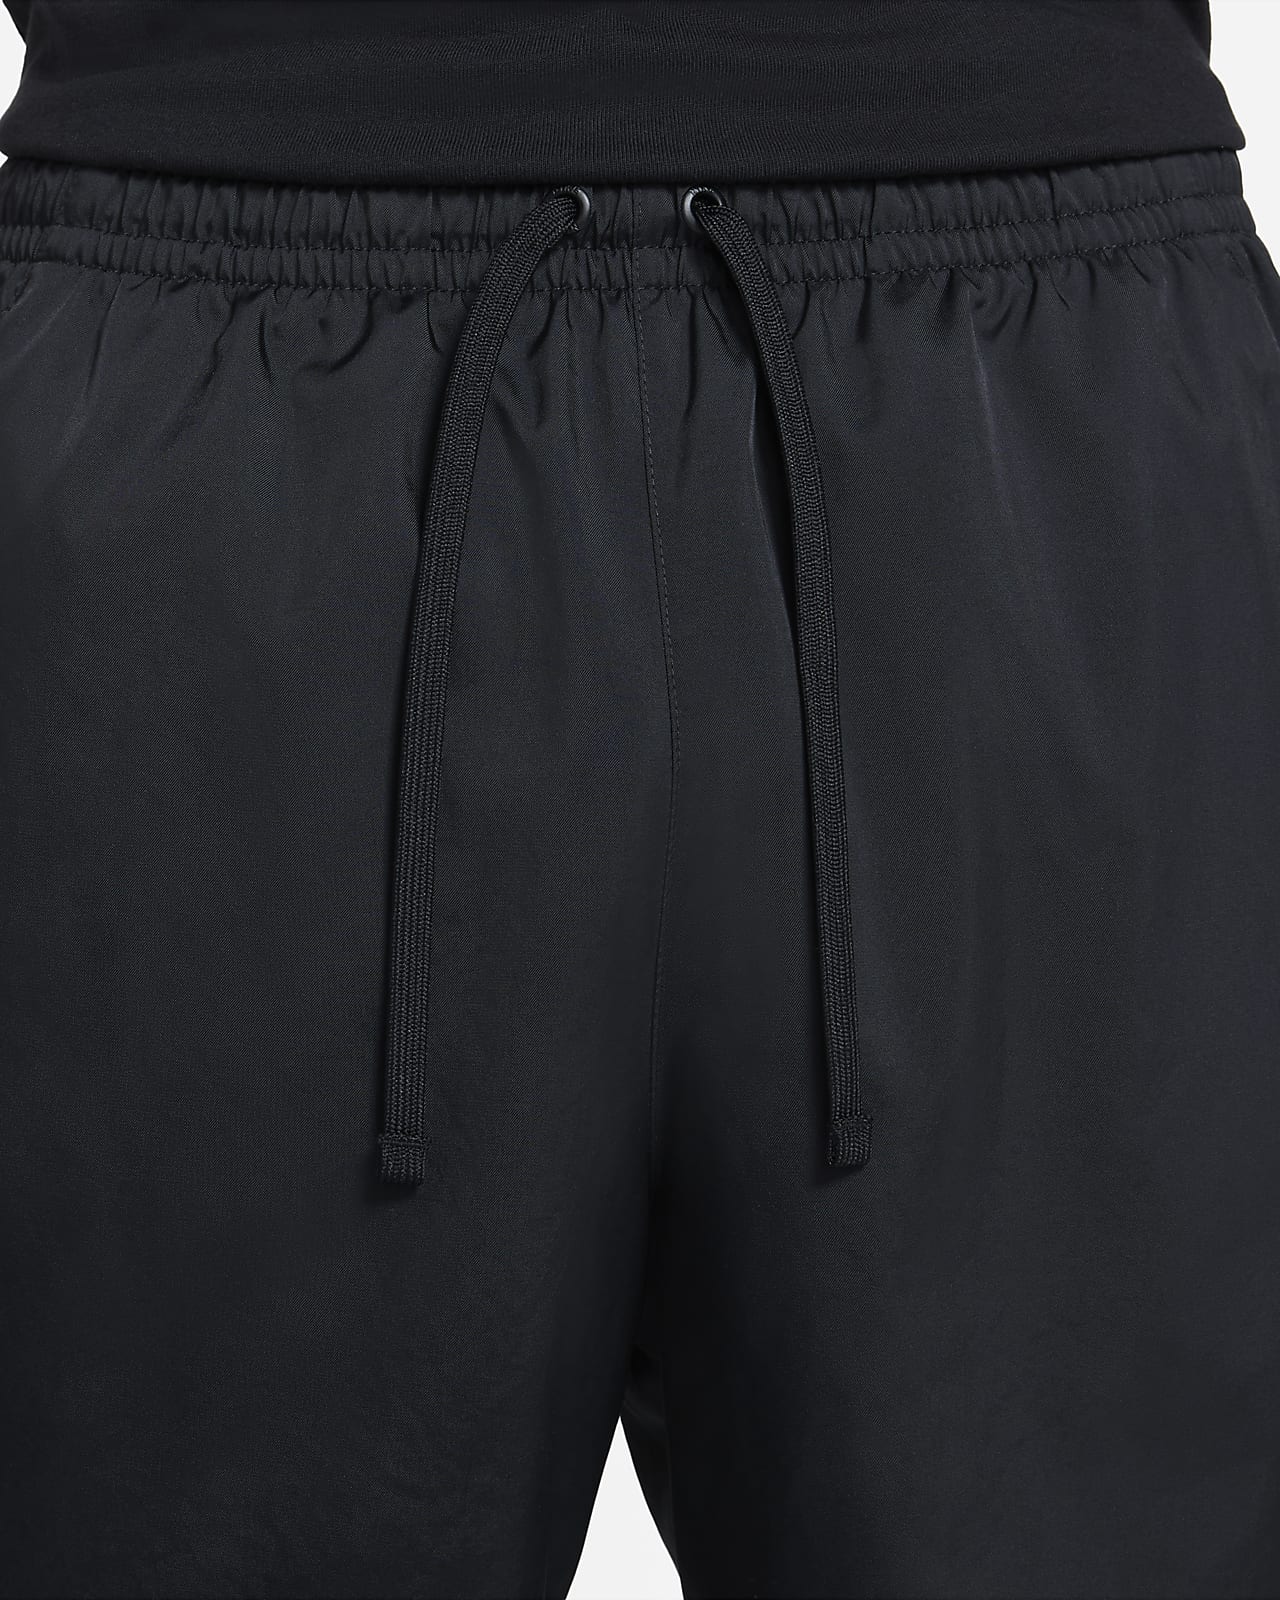 Nike Sportswear Men's Woven Shorts. Nike.com